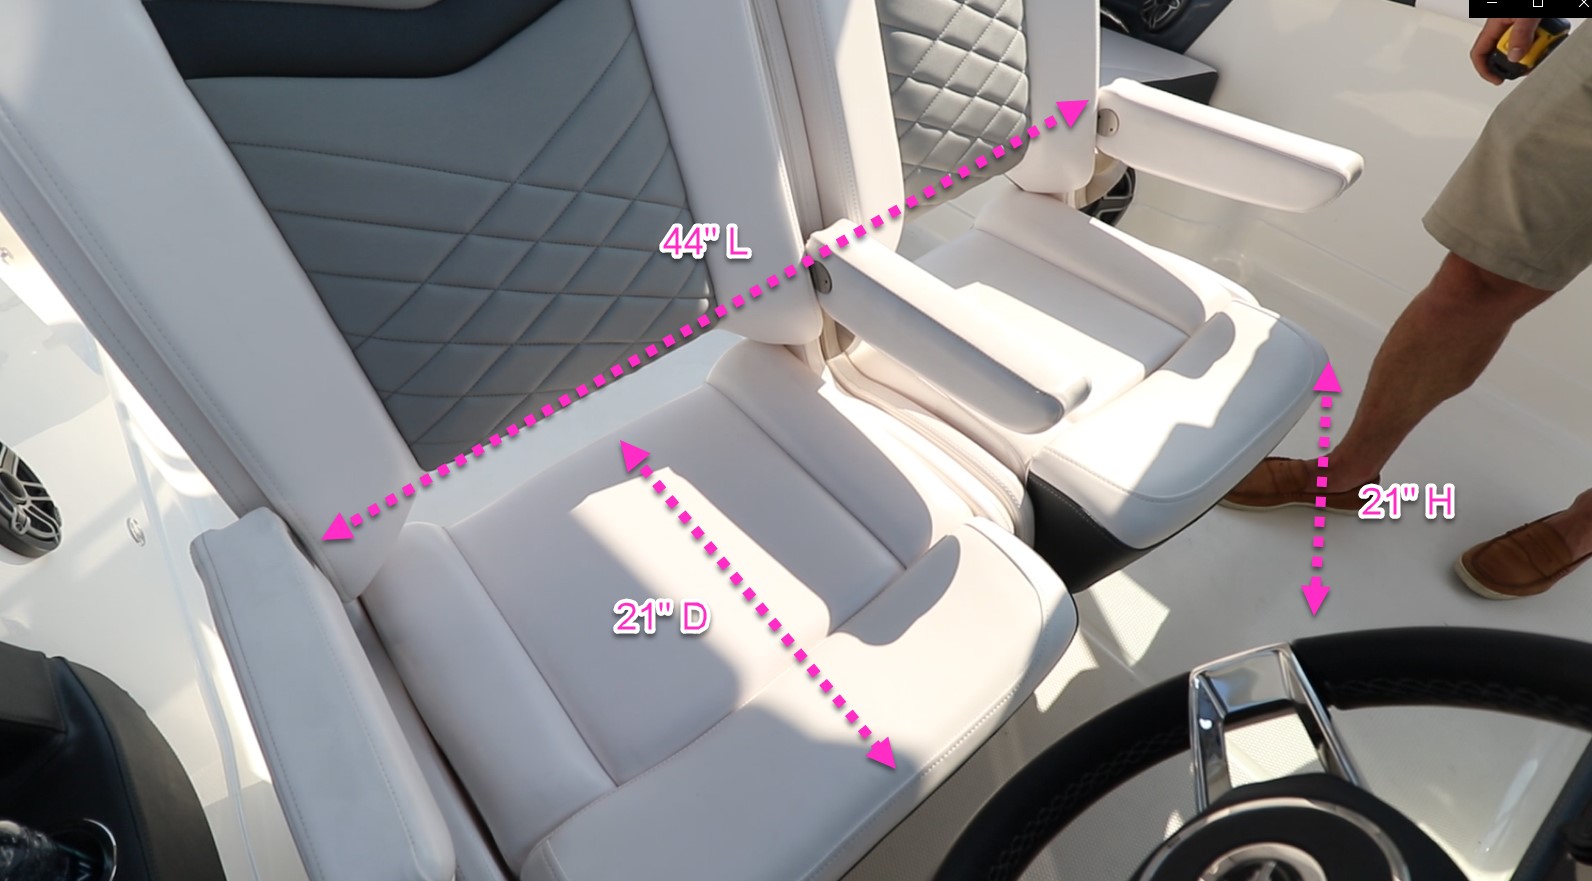 Seat measurements